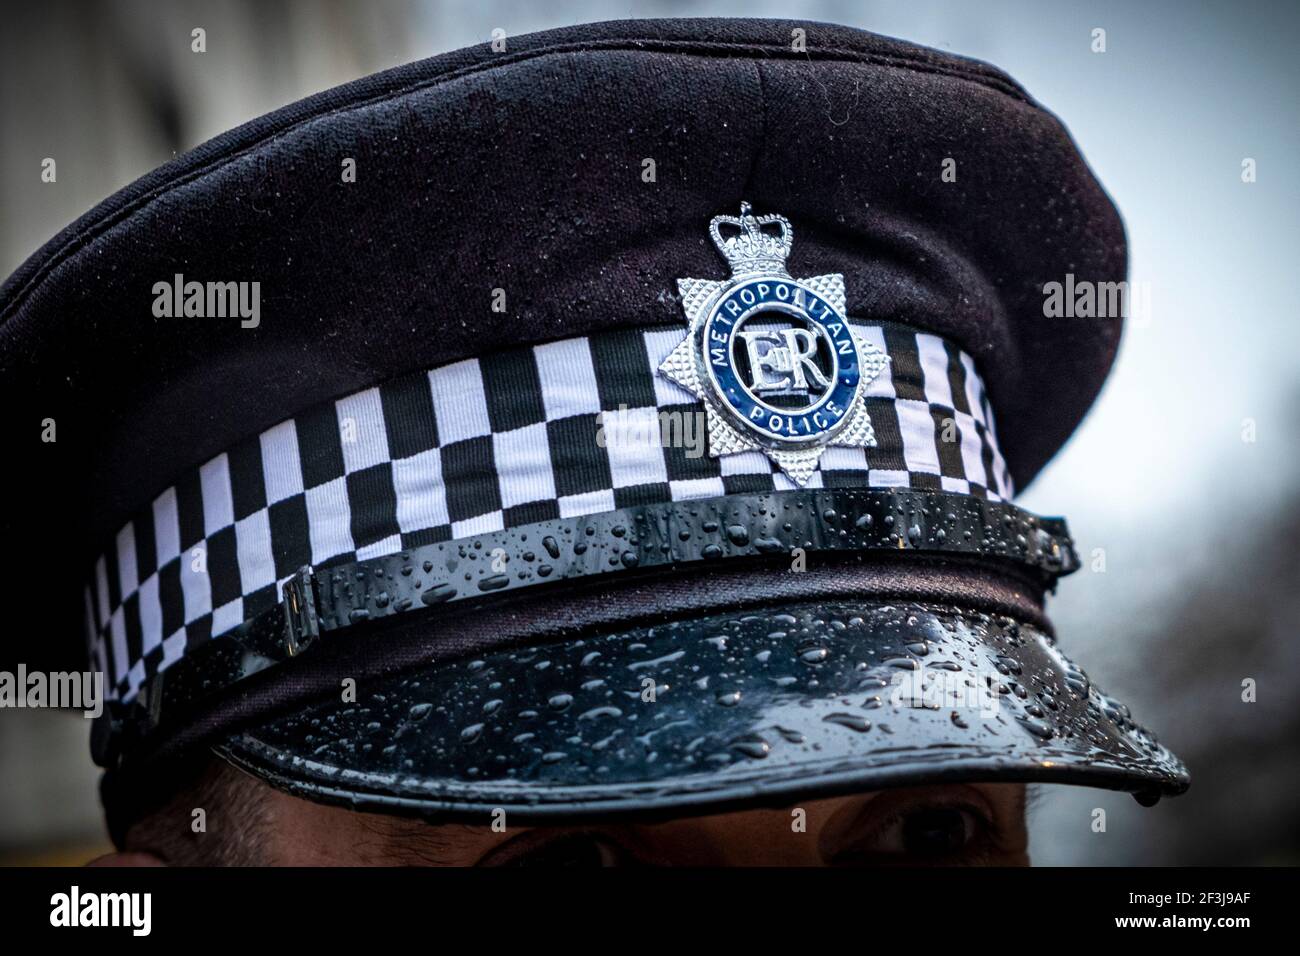 Metropolitan Police Officer wearing a cap at scotland yard Photography by Jason Bye t:  07966 173 930 e: mail@jasonbye.com w: http://www.jasonbye.com Stock Photo